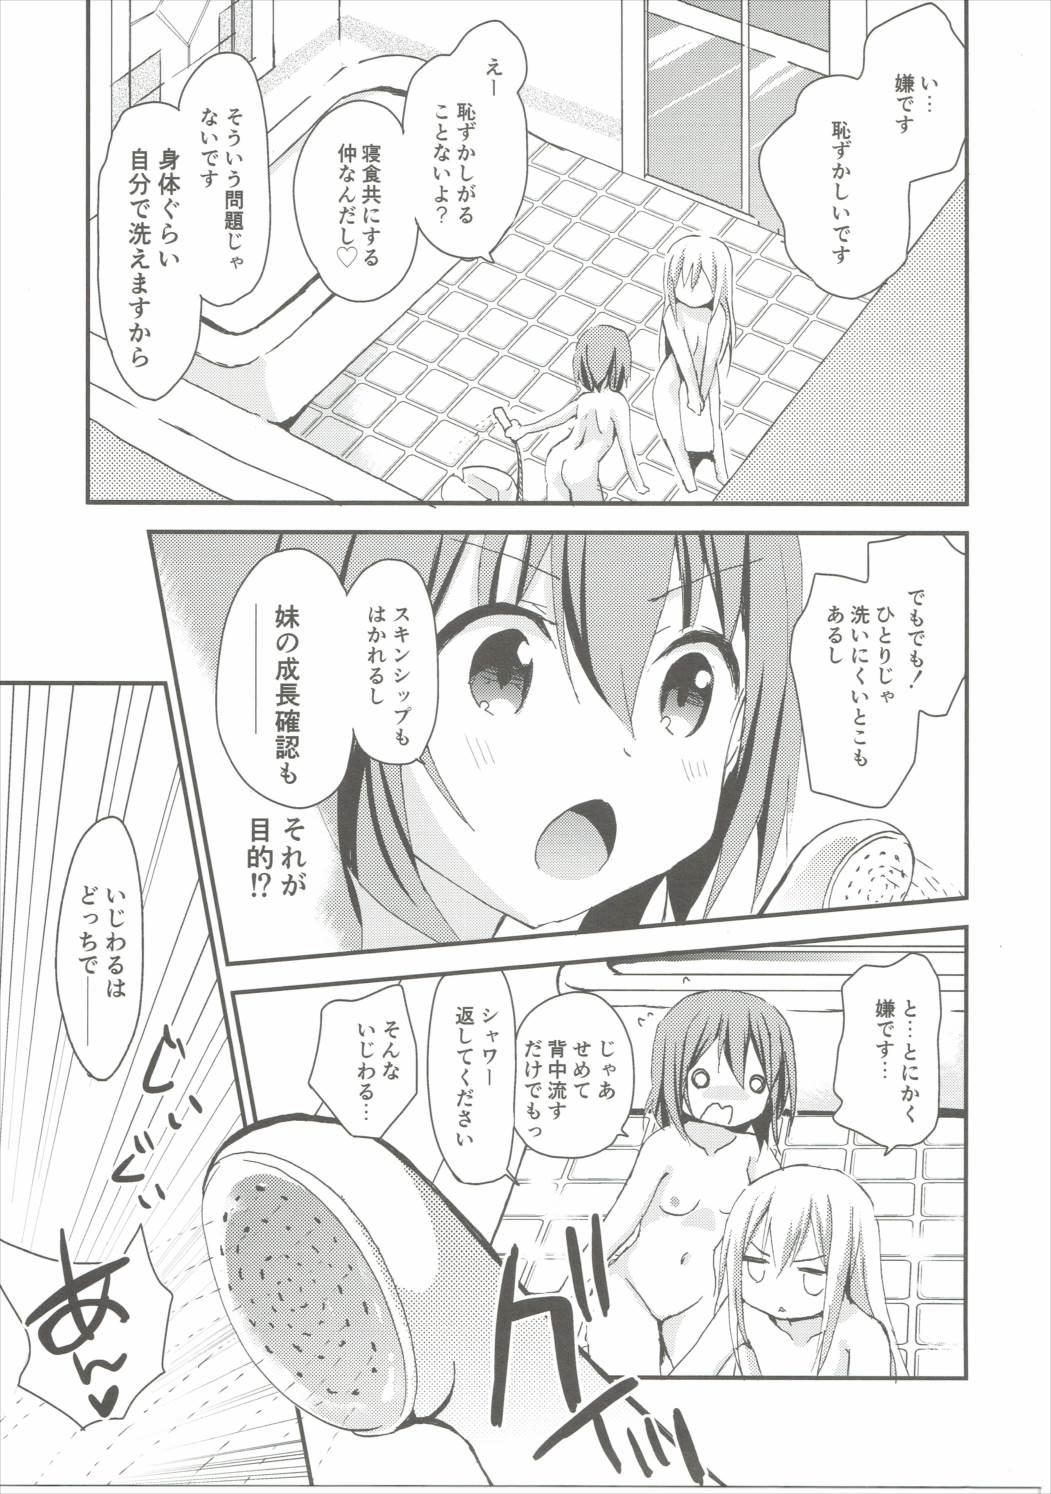 Live Shower Time Accident - Gochuumon wa usagi desu ka Stretch - Page 4